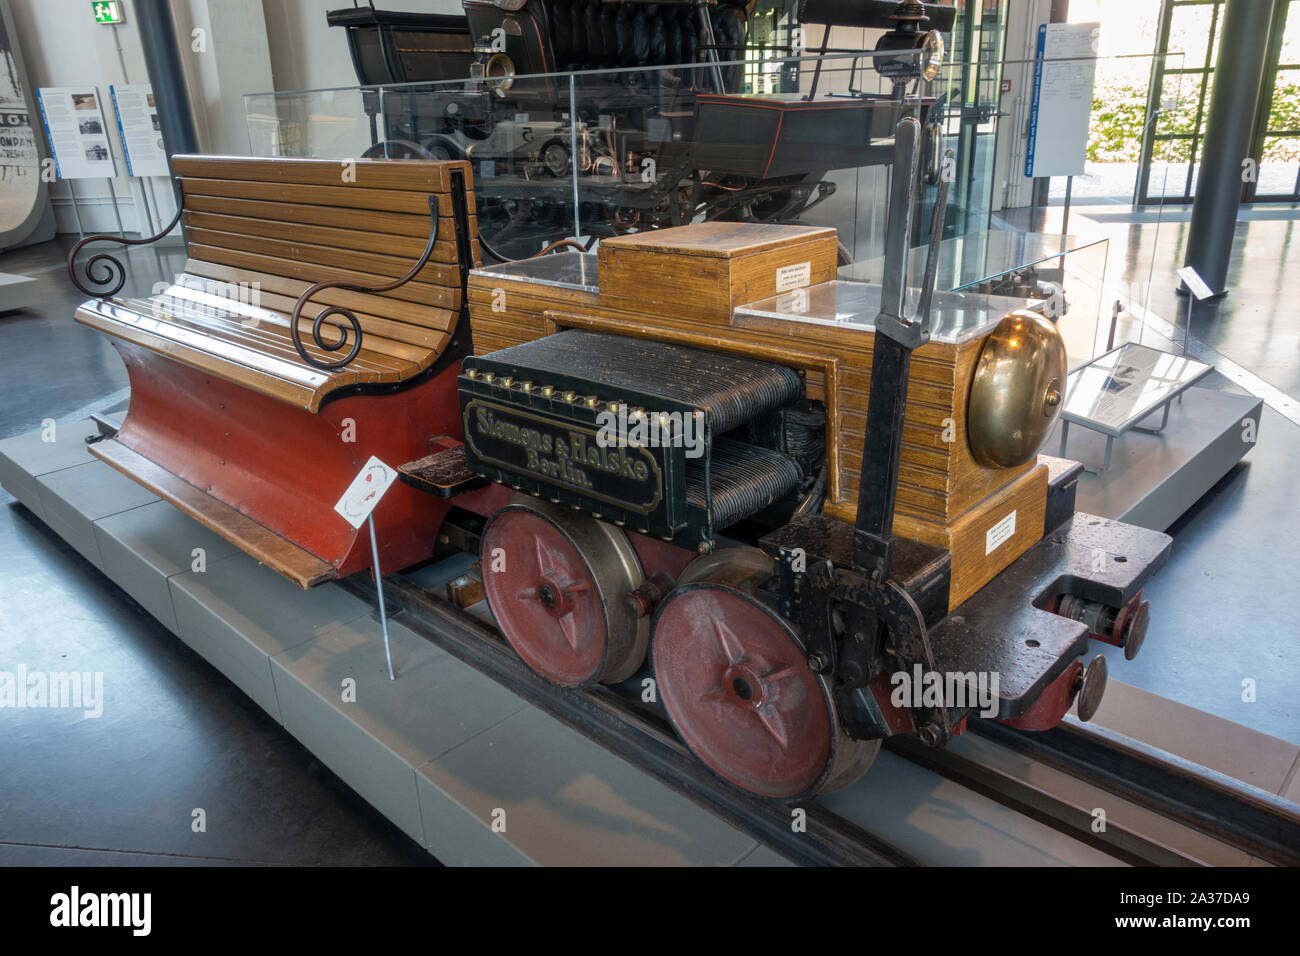 La prima locomotiva elettrica,(1879), da parte di Siemens & Halske Nel Deutsches Museum Verkehrszentrum, (Tedesco Museo dei Trasporti), Monaco di Baviera, Germania. Foto Stock